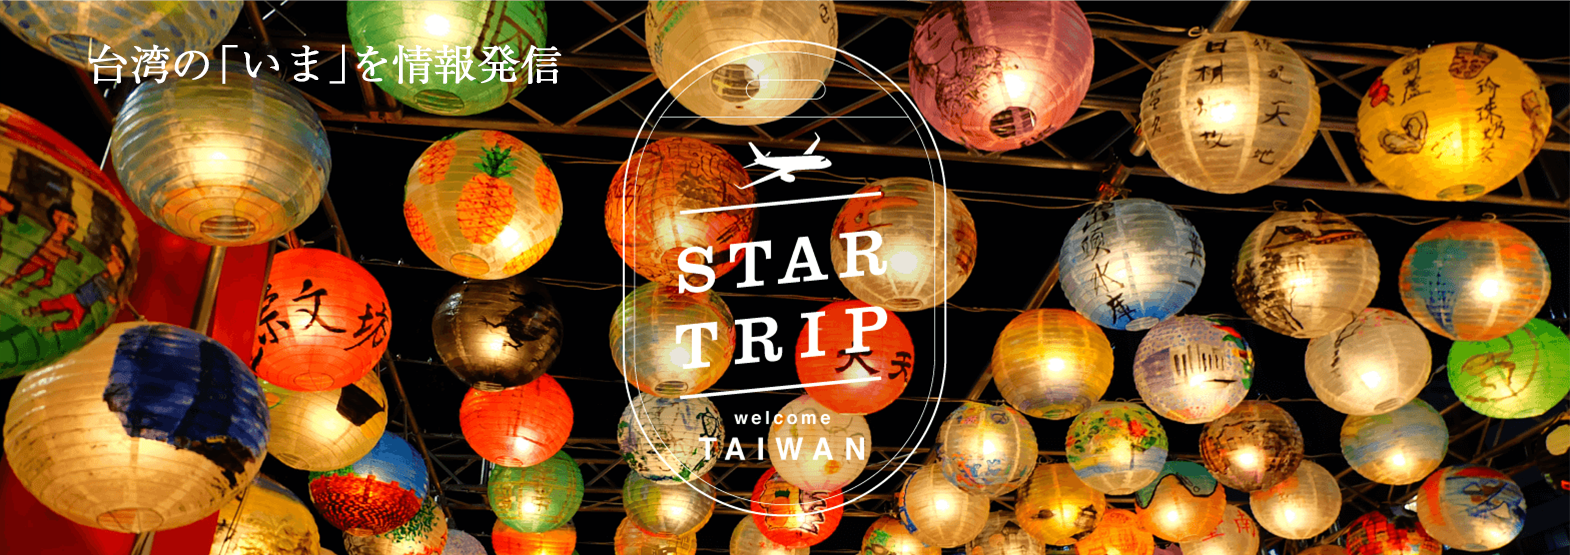 welcome TAIWAN STAR TRIP